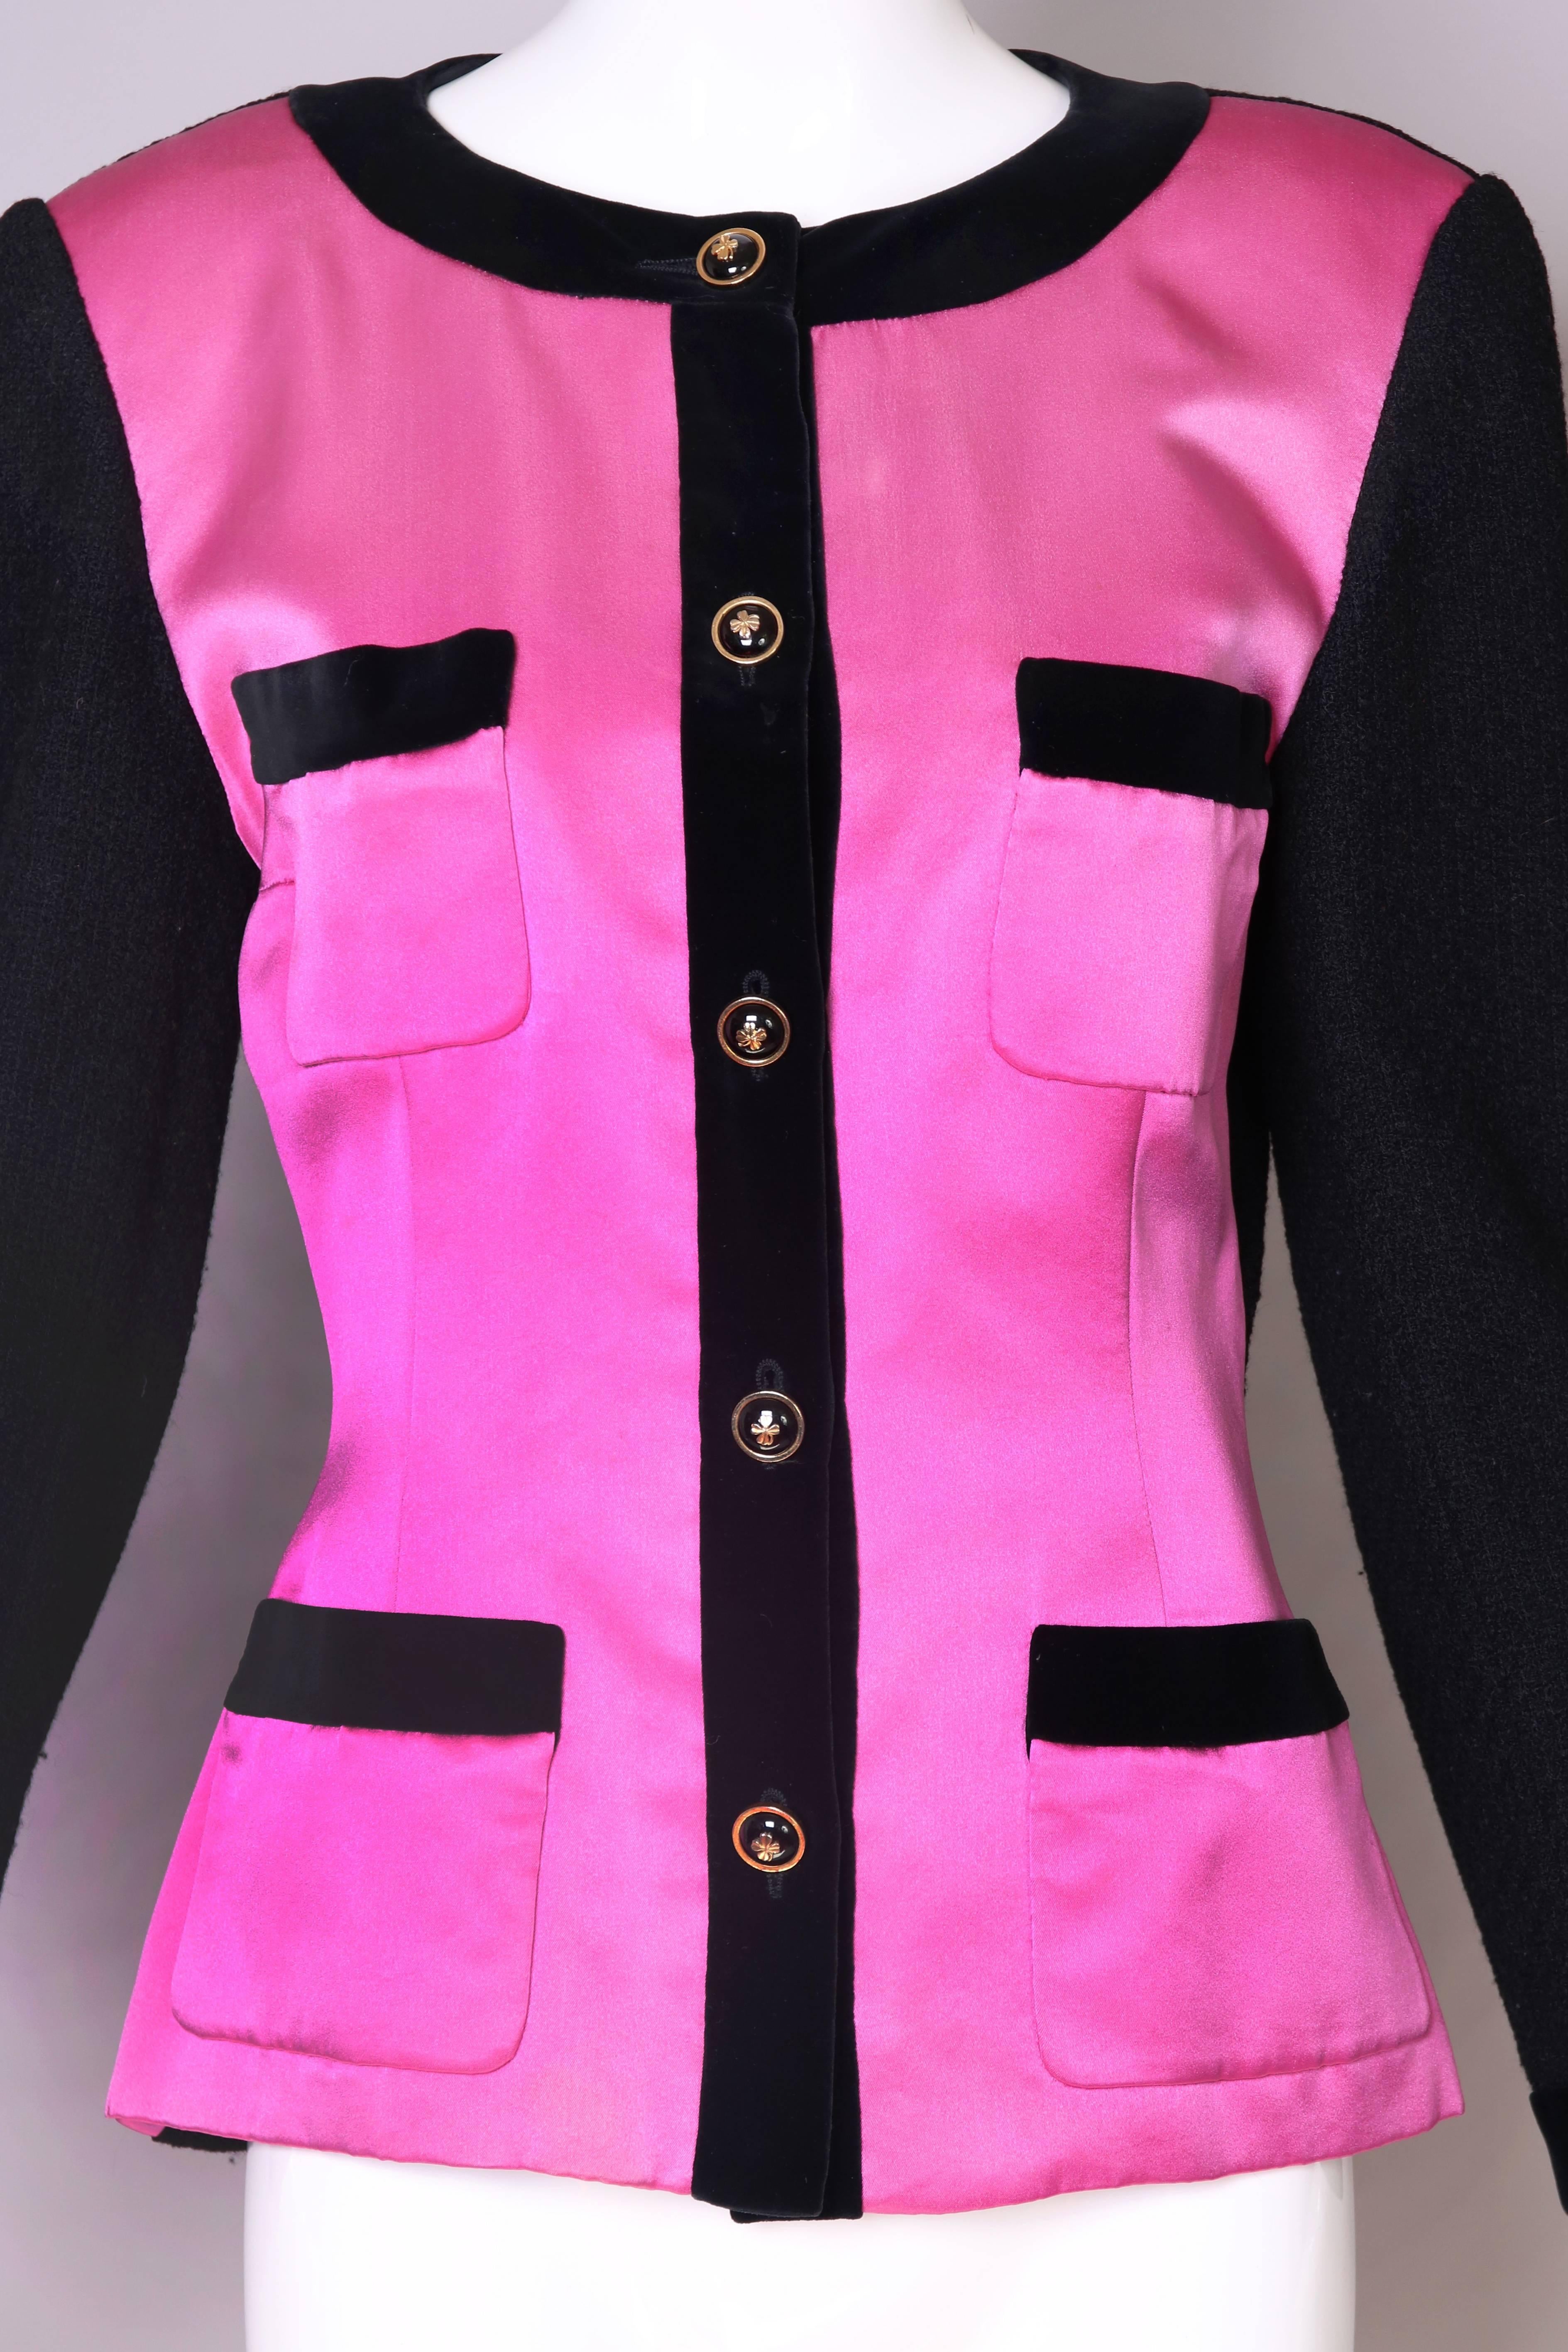 Women's Chanel Pink Satin & Black Boucle Jacket w/Velvet Trim & Four-leaf Clover Buttons